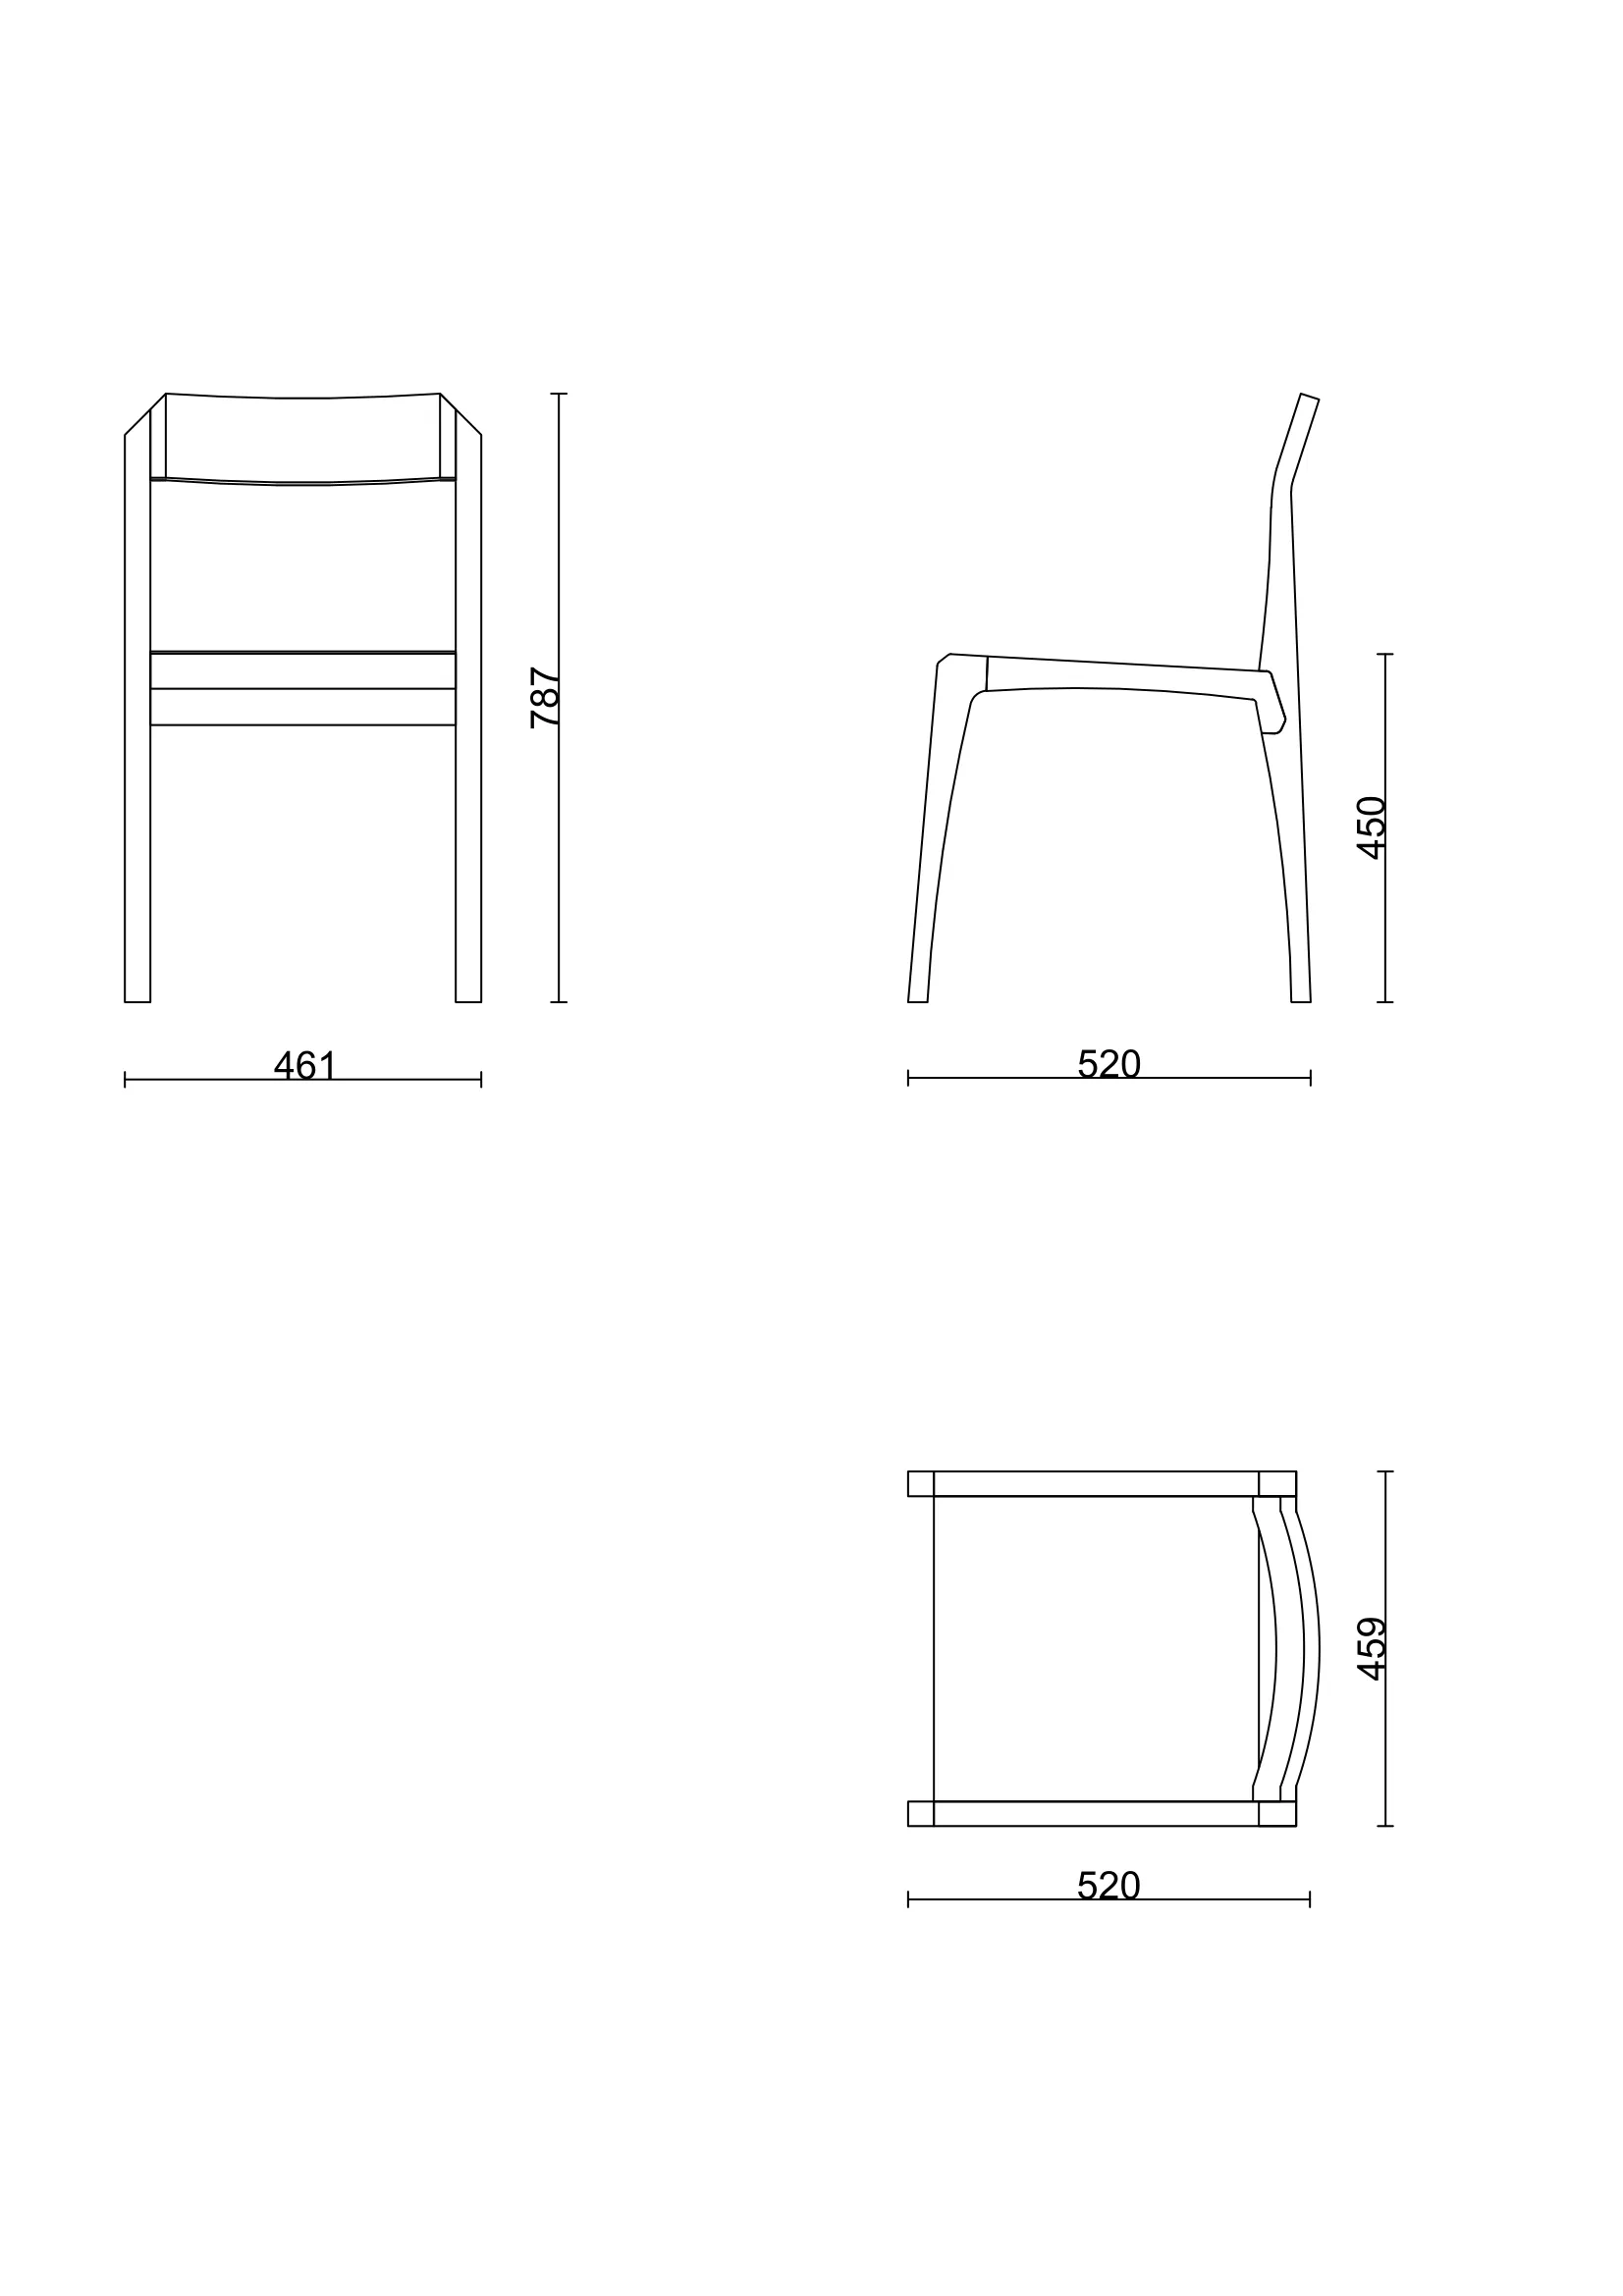 Brazda Chair - Rinocca (rinocca brazda chair blueprint)